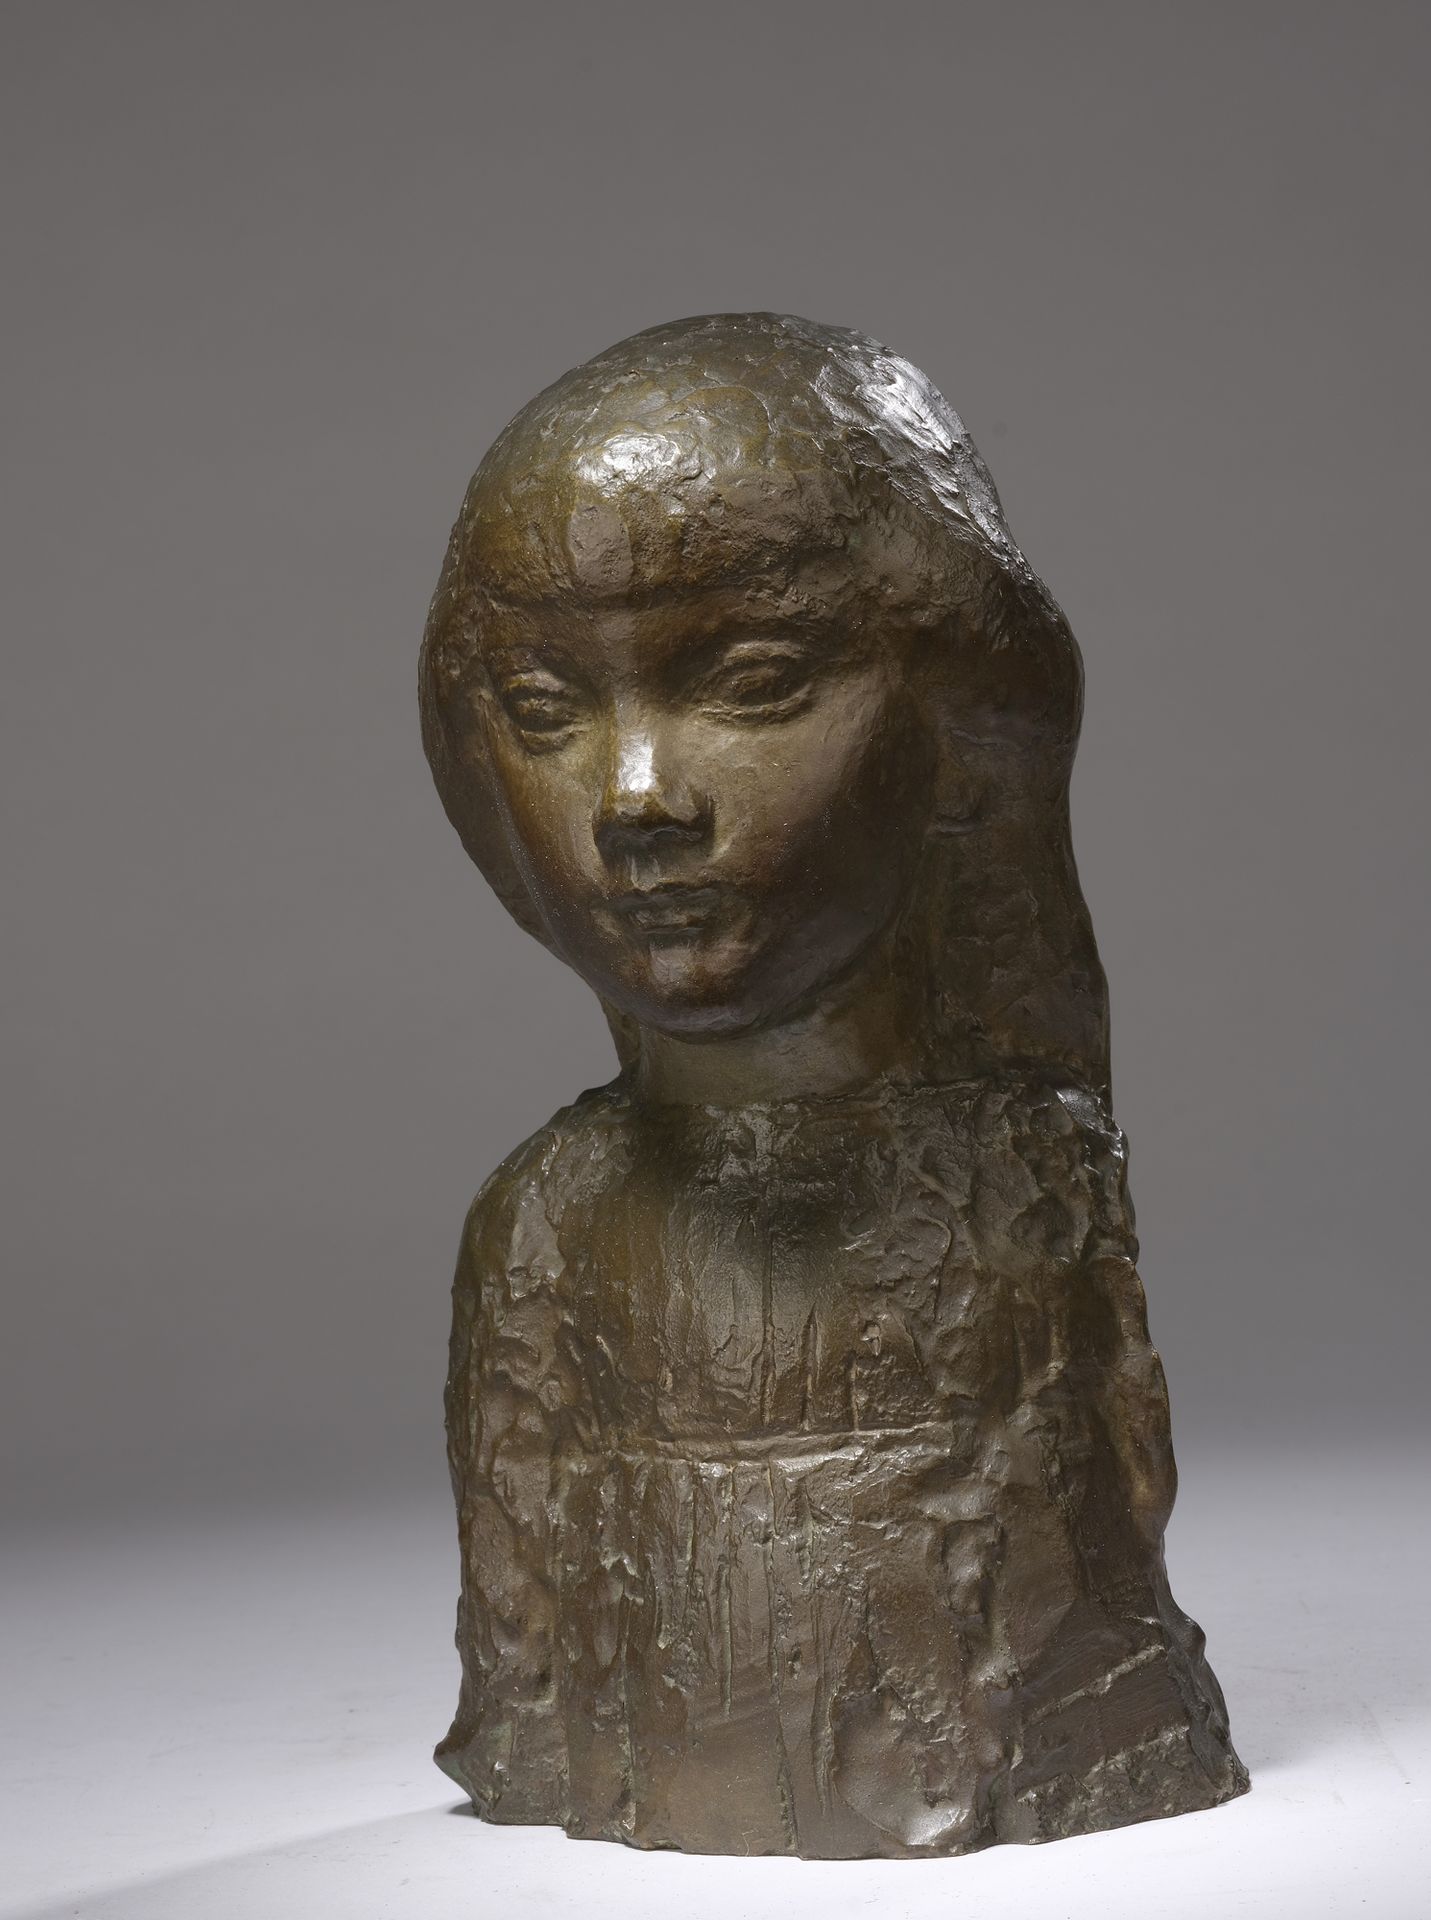 Null 让-卡顿(1912-1988)

女孩的半身像

约1950年。

青铜，有浅棕色的铜锈，并有绿色的阴影。

签名：J. Carton，注有第二状态，&hellip;